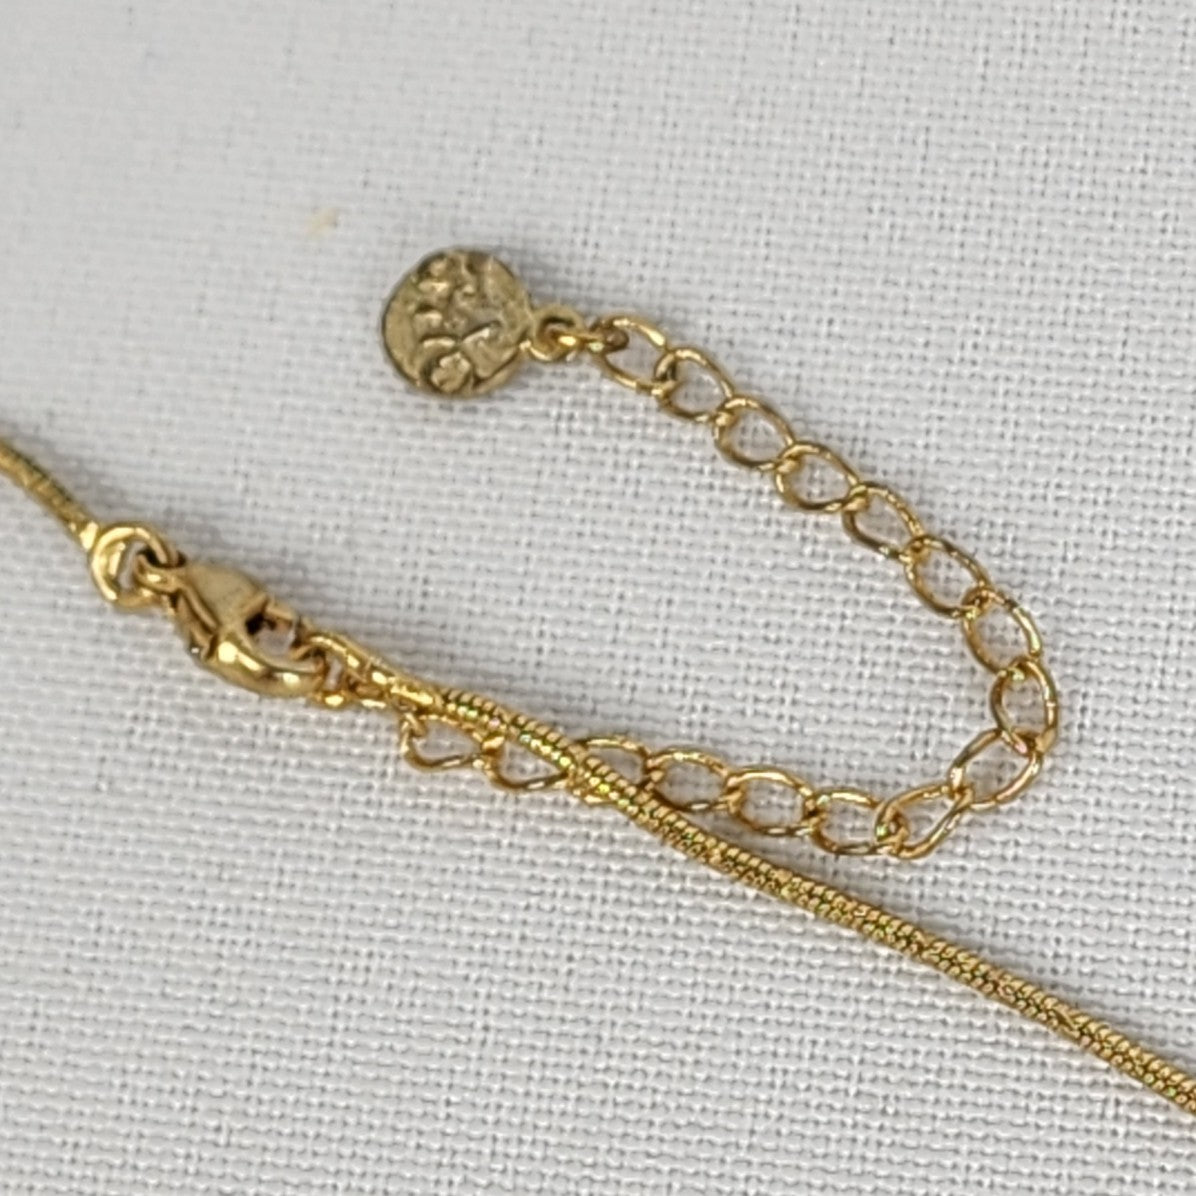 FAC Gold Tone Cat Pendant Rhinestone Necklace